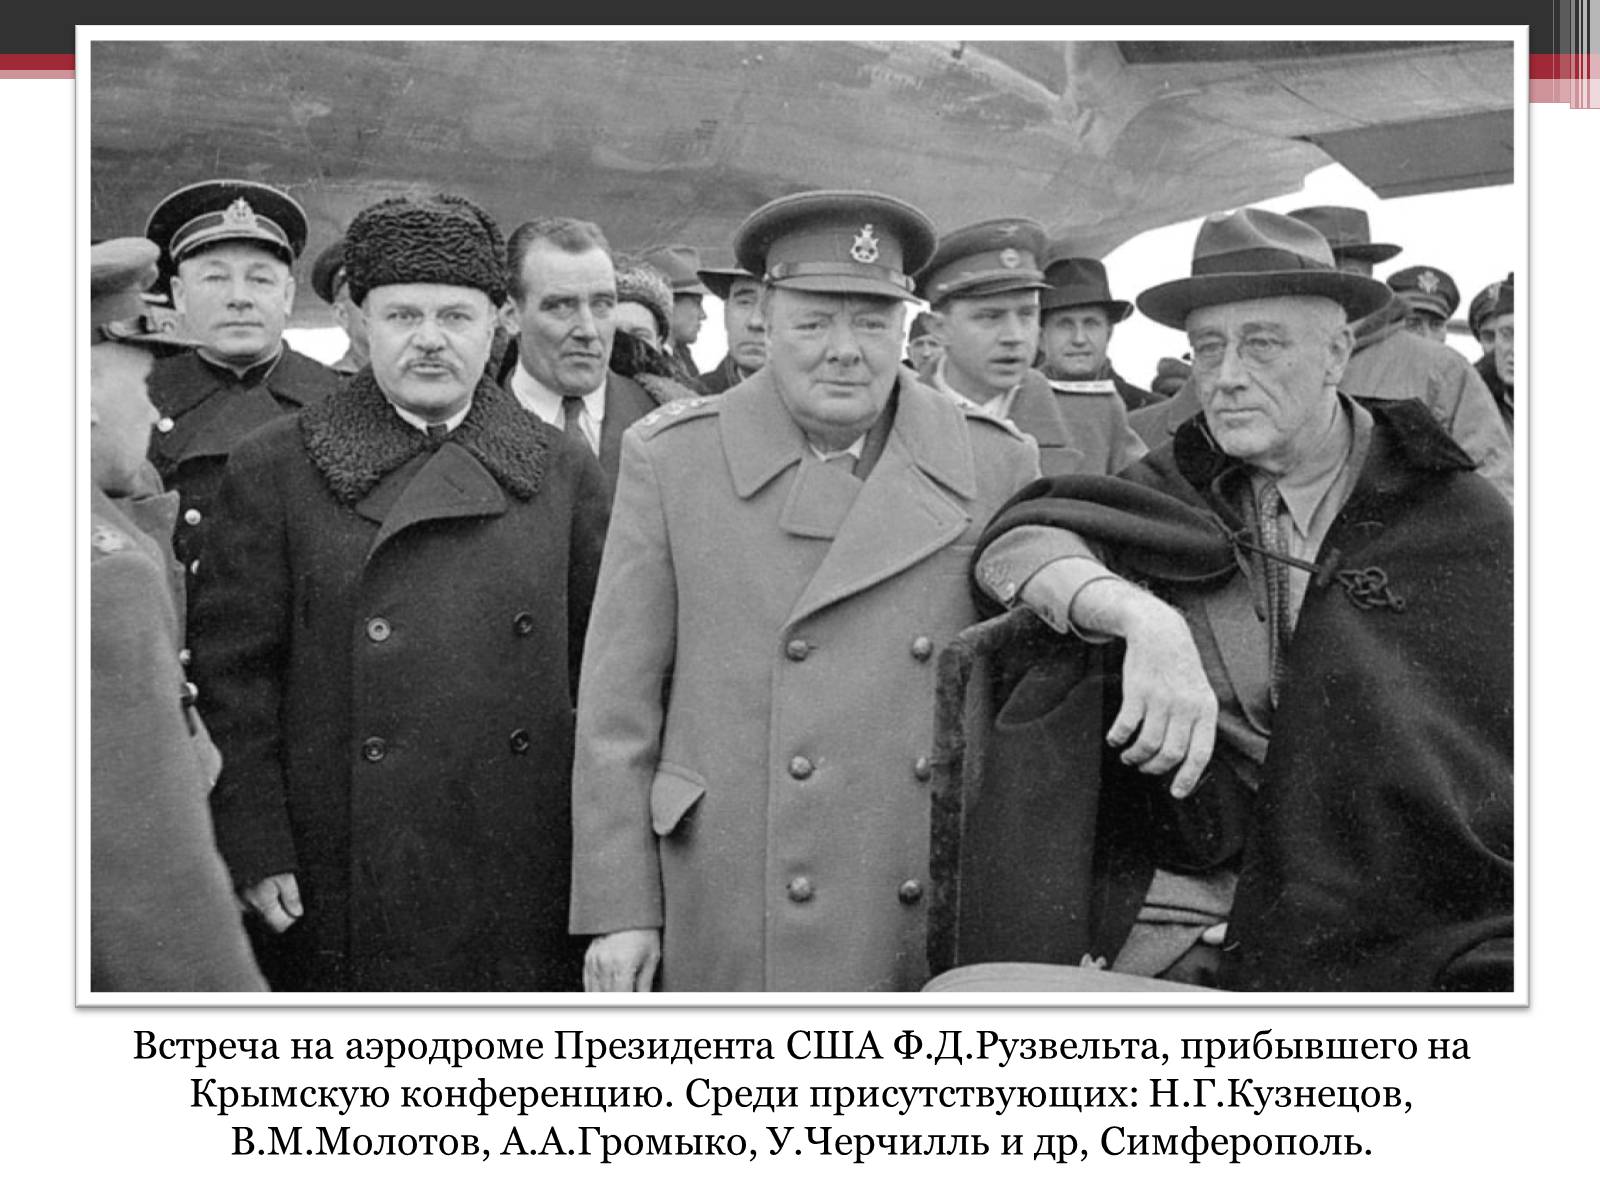 Сталин переговоры. Рузвельт Черчилль Сталин конференция Ялта. Черчилль Ялтинская конференция. Черчилль и Сталин в Ялте. Сталин Рузвельт Черчилль Ялтинская конференция фото.